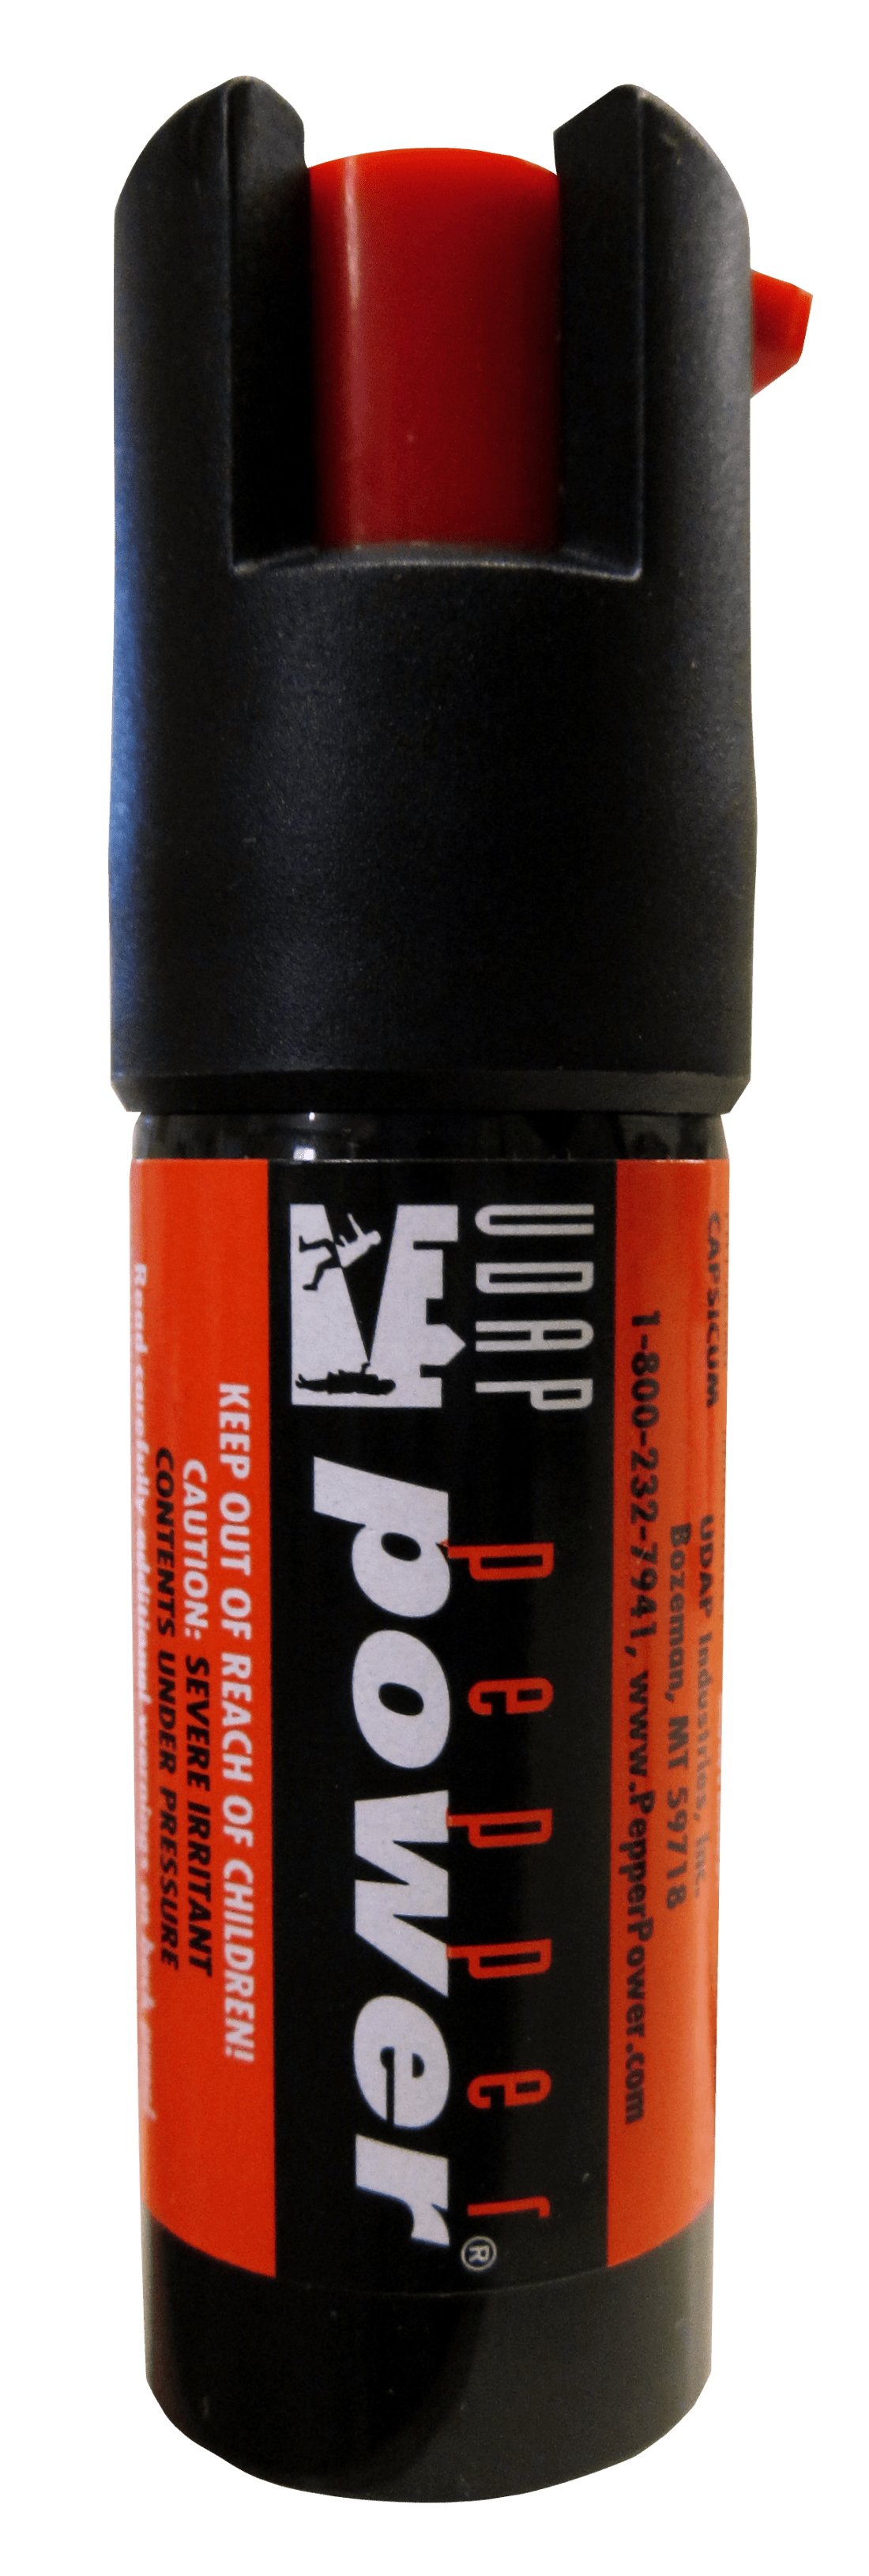 UDAP Udap Pepper Spray, Udap 2vc     Pepper Spray 11g Accessories